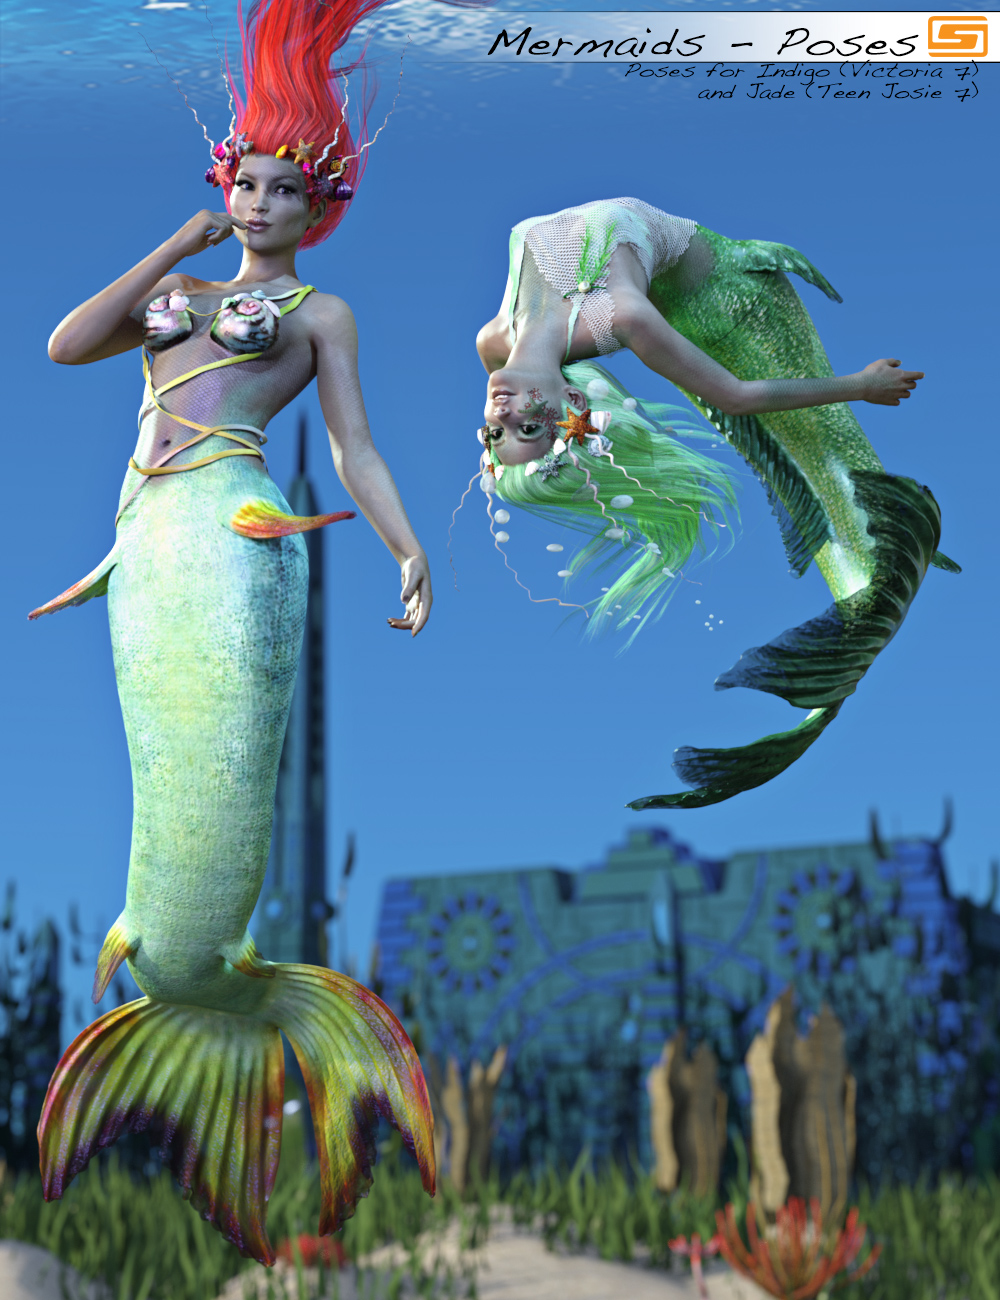 Laguna: Mermaids - Poses for Indigo/Victoria 7 and Jade/Teen Josie 7 by: Sedor, 3D Models by Daz 3D